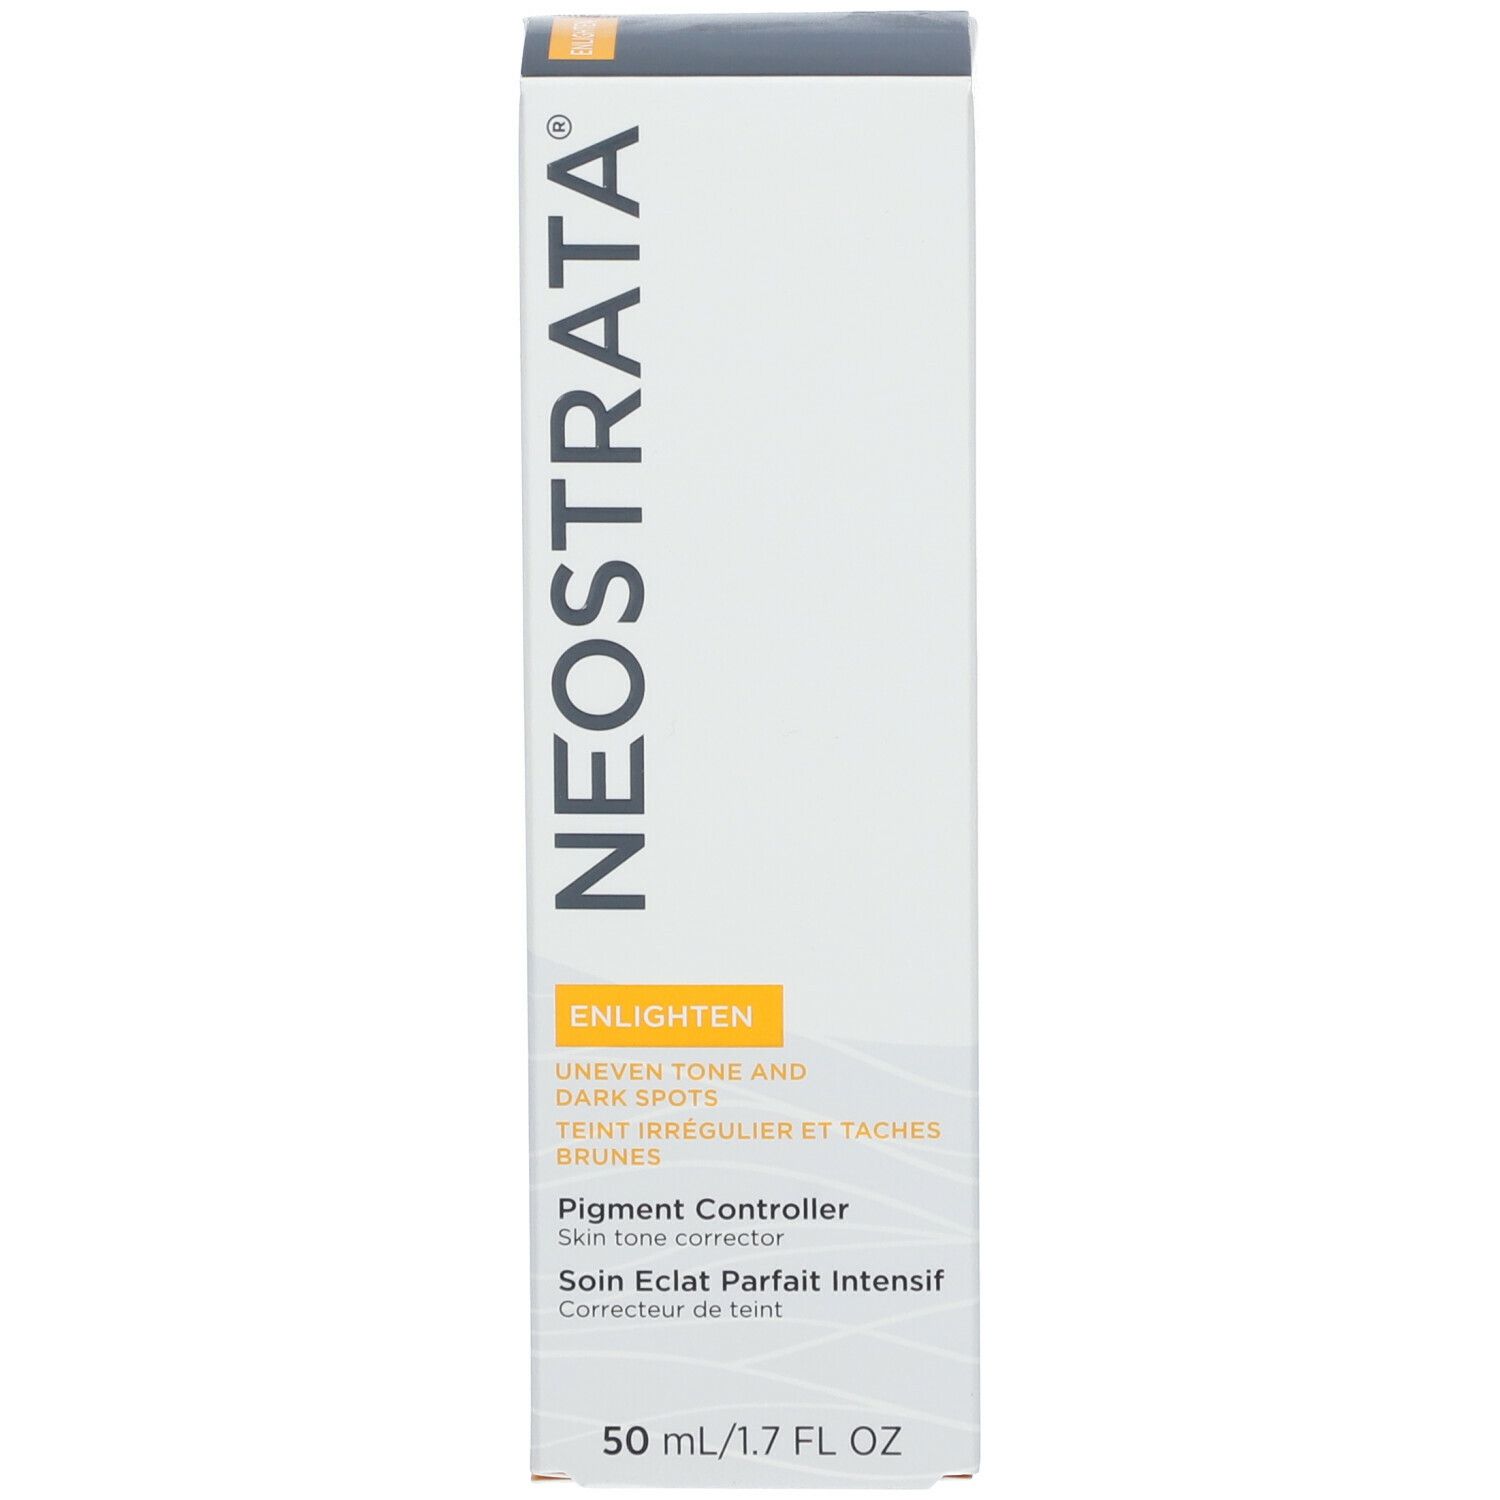 NeoStrata® Enlighten Pigment Controller